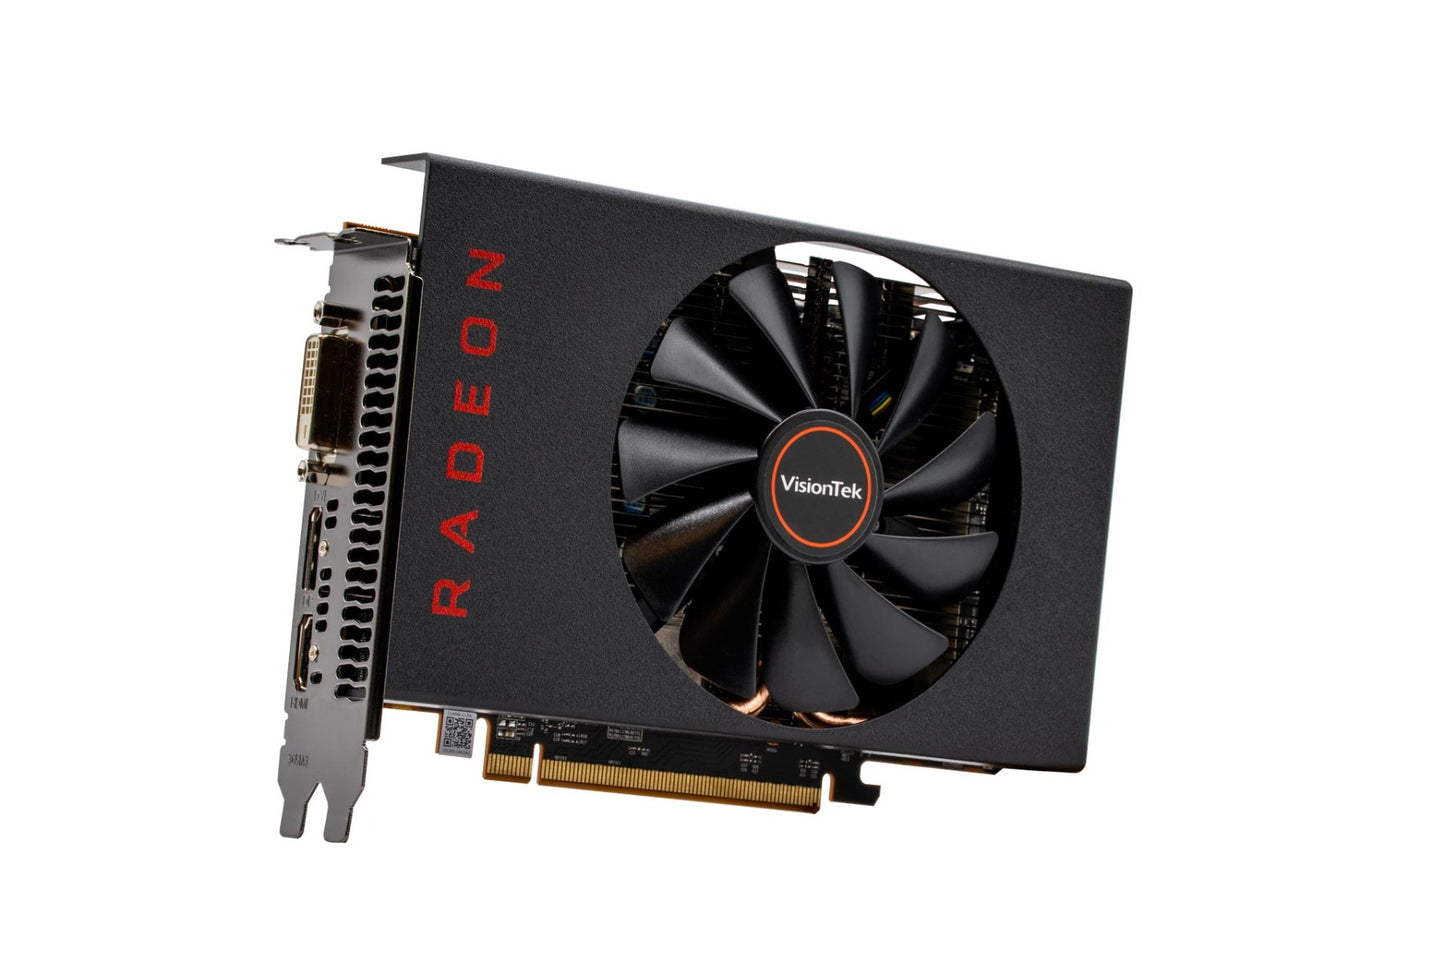 Radeon RX 5500 XT 4GB GDDR6 Graphics Card